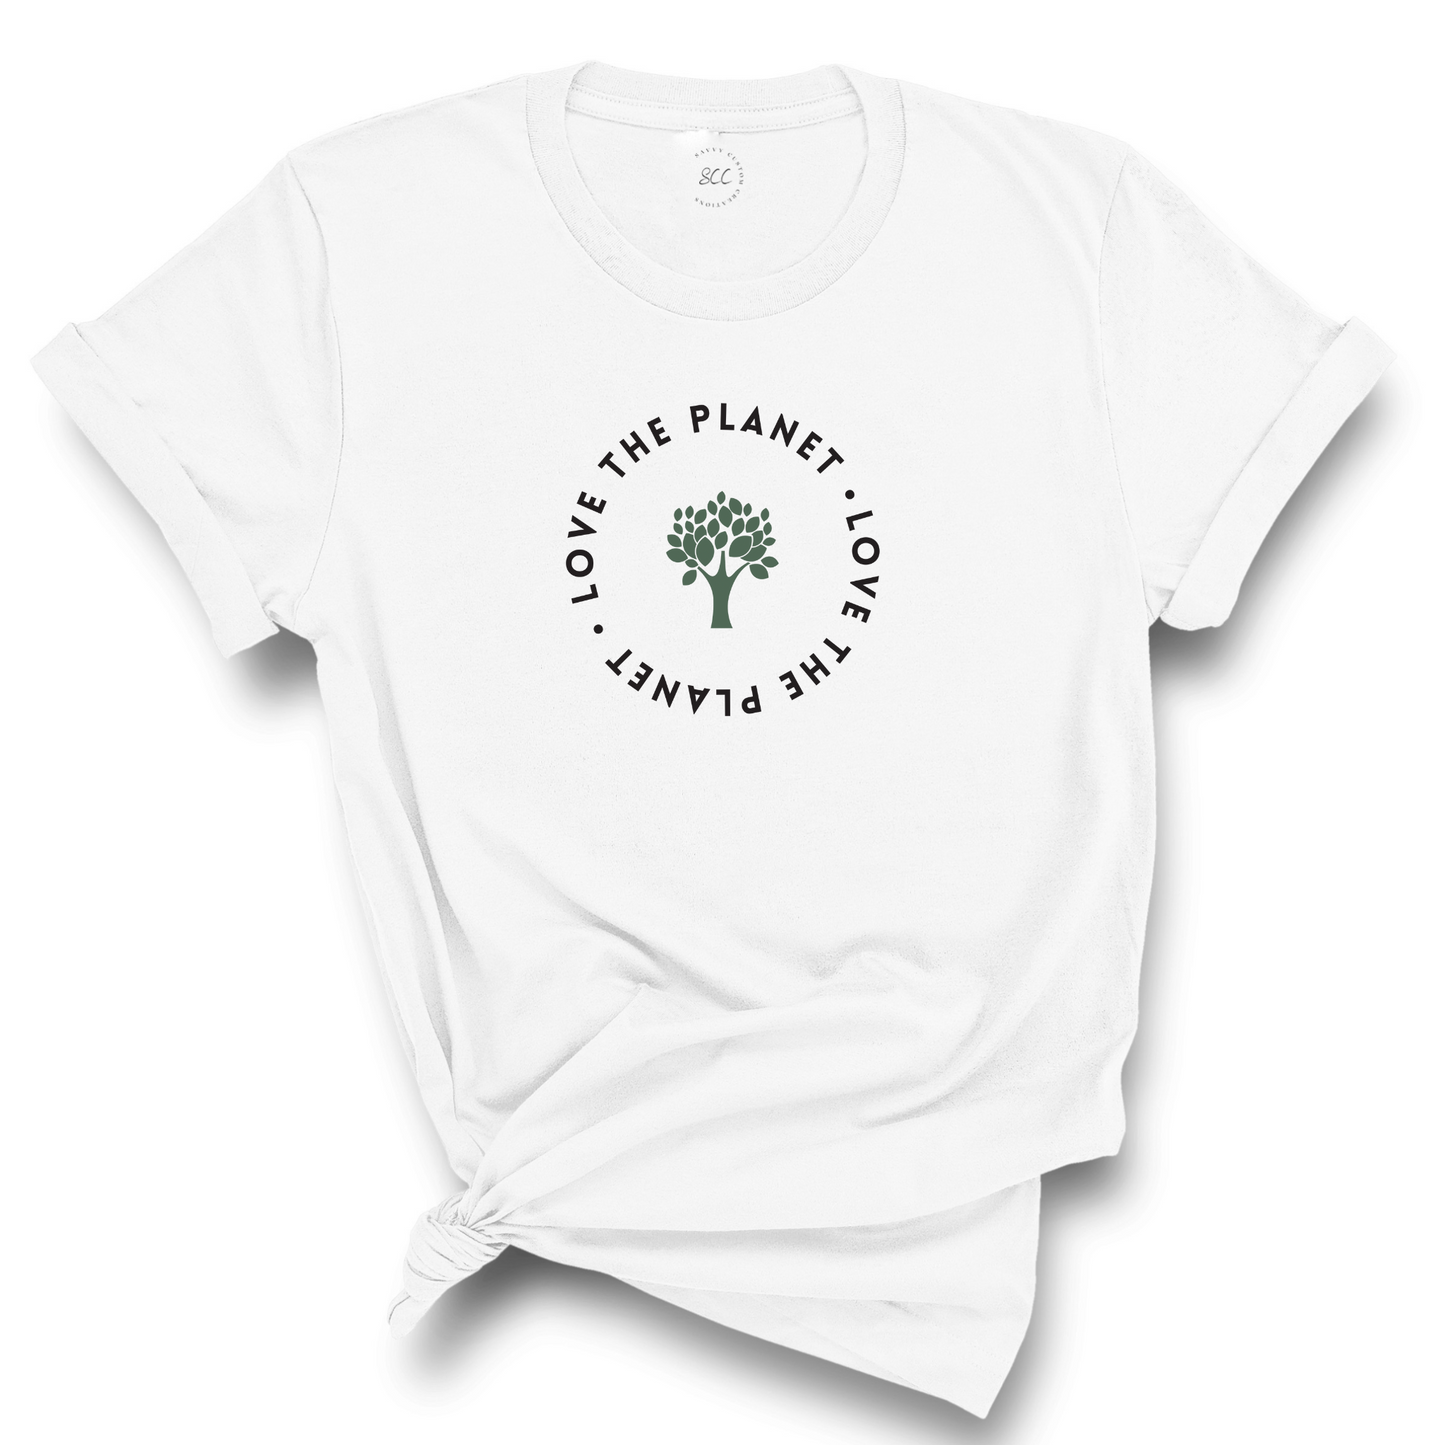 LOVE THE PLANET - Unisex T-Shirt